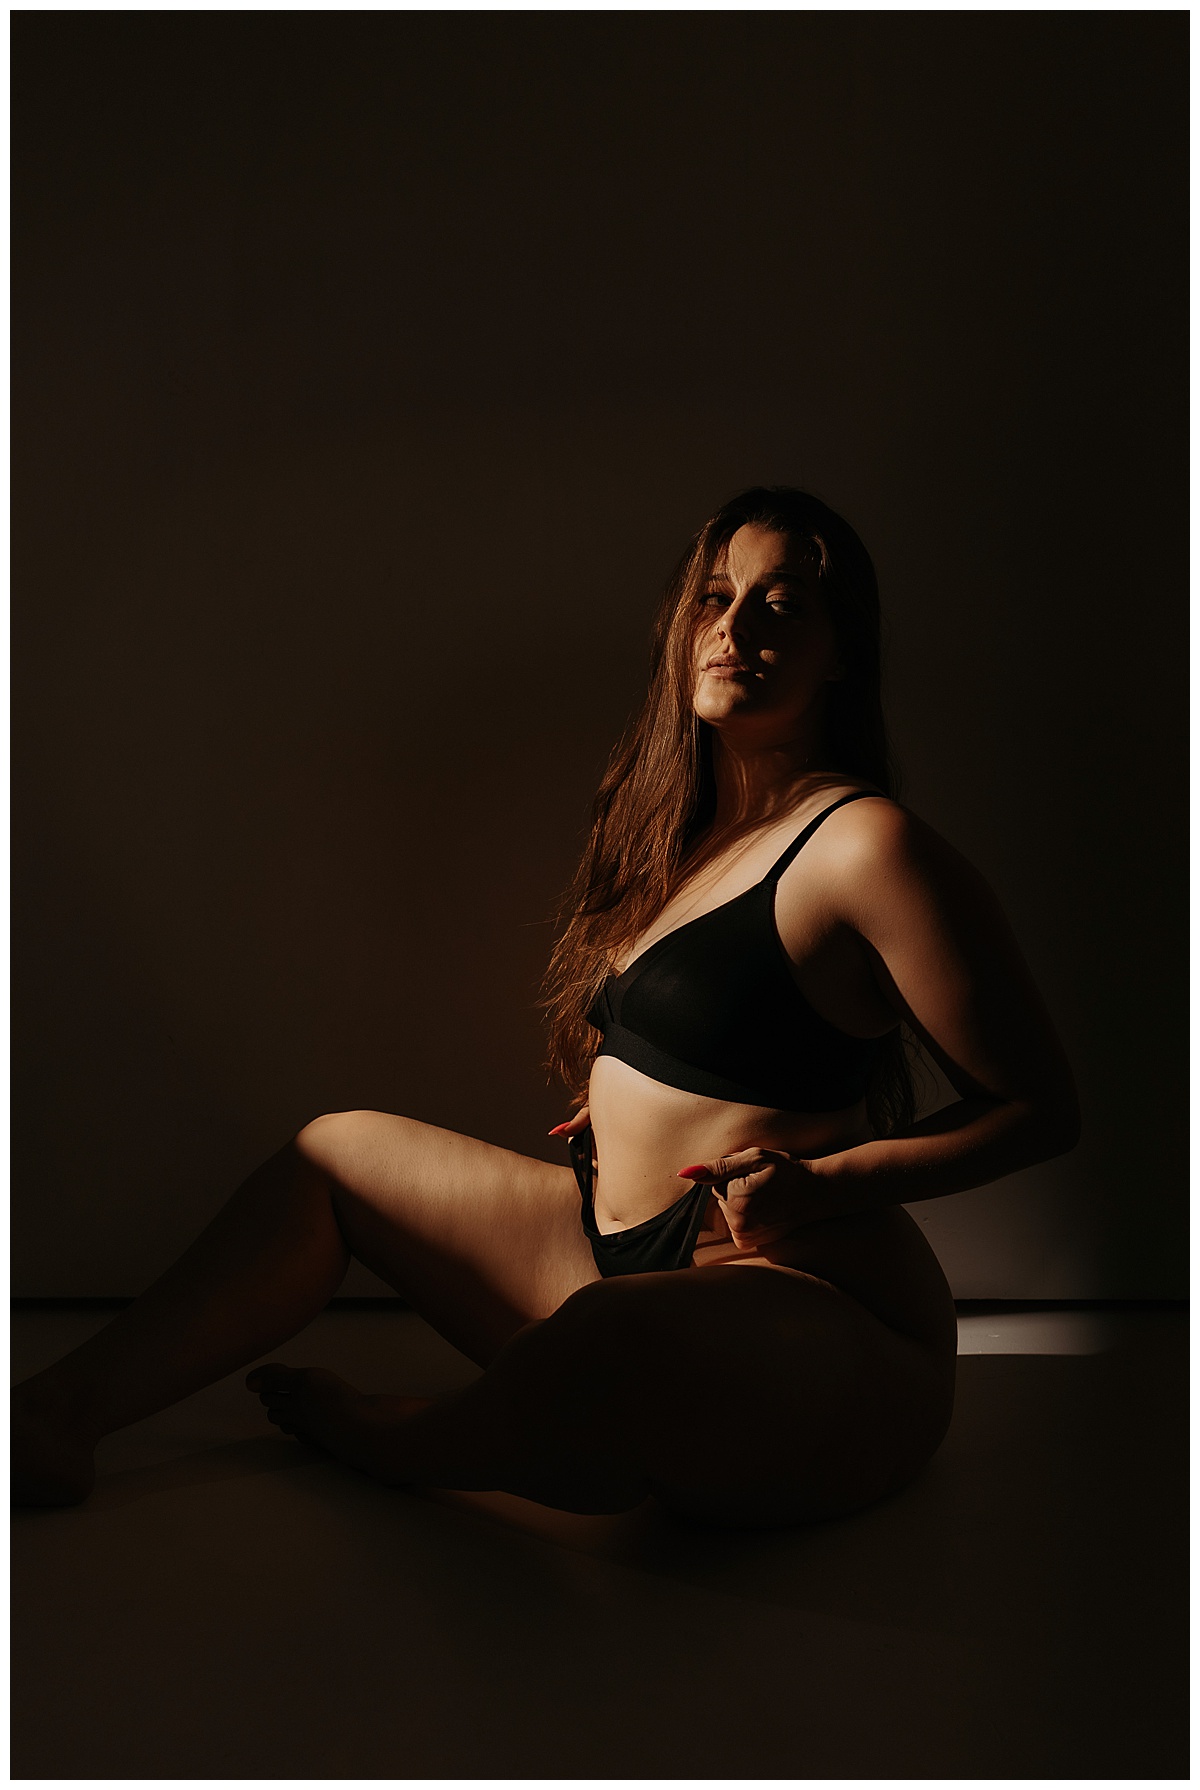 Girl adjusts lingerie bottoms using artificial light during boudoir session